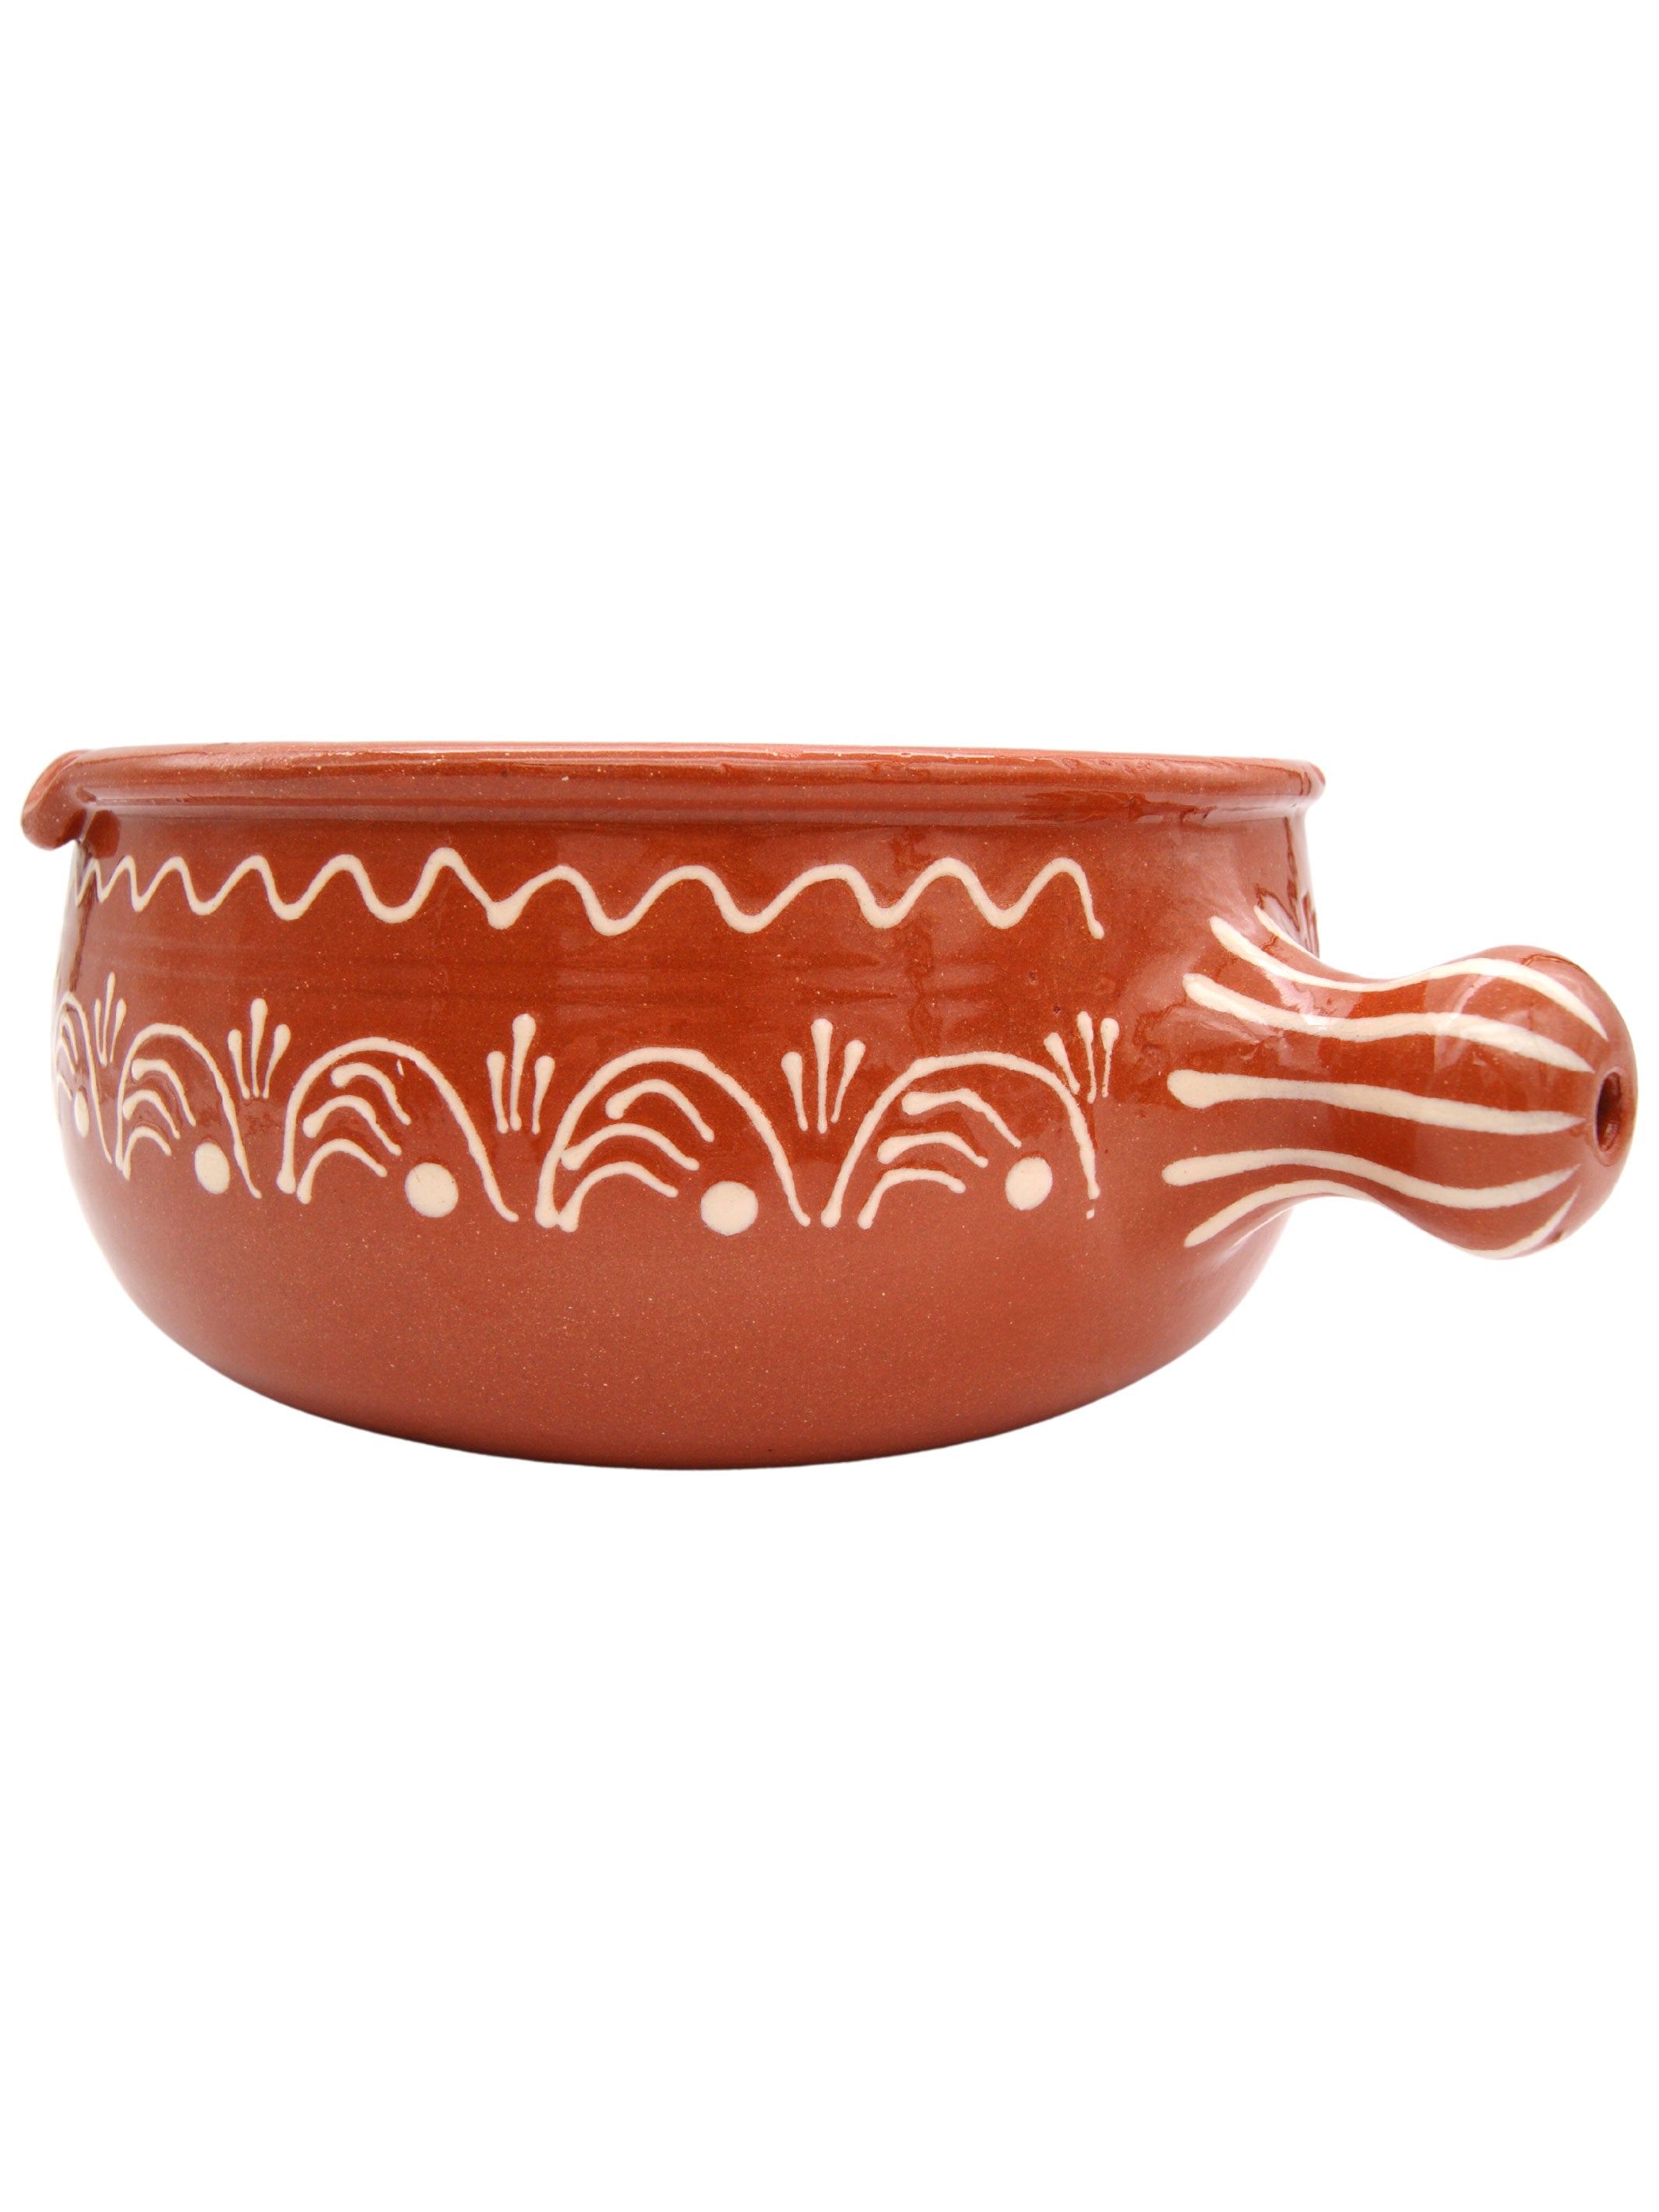 Portuguese Pottery Glazed Terracotta Cooking Pot Casserole